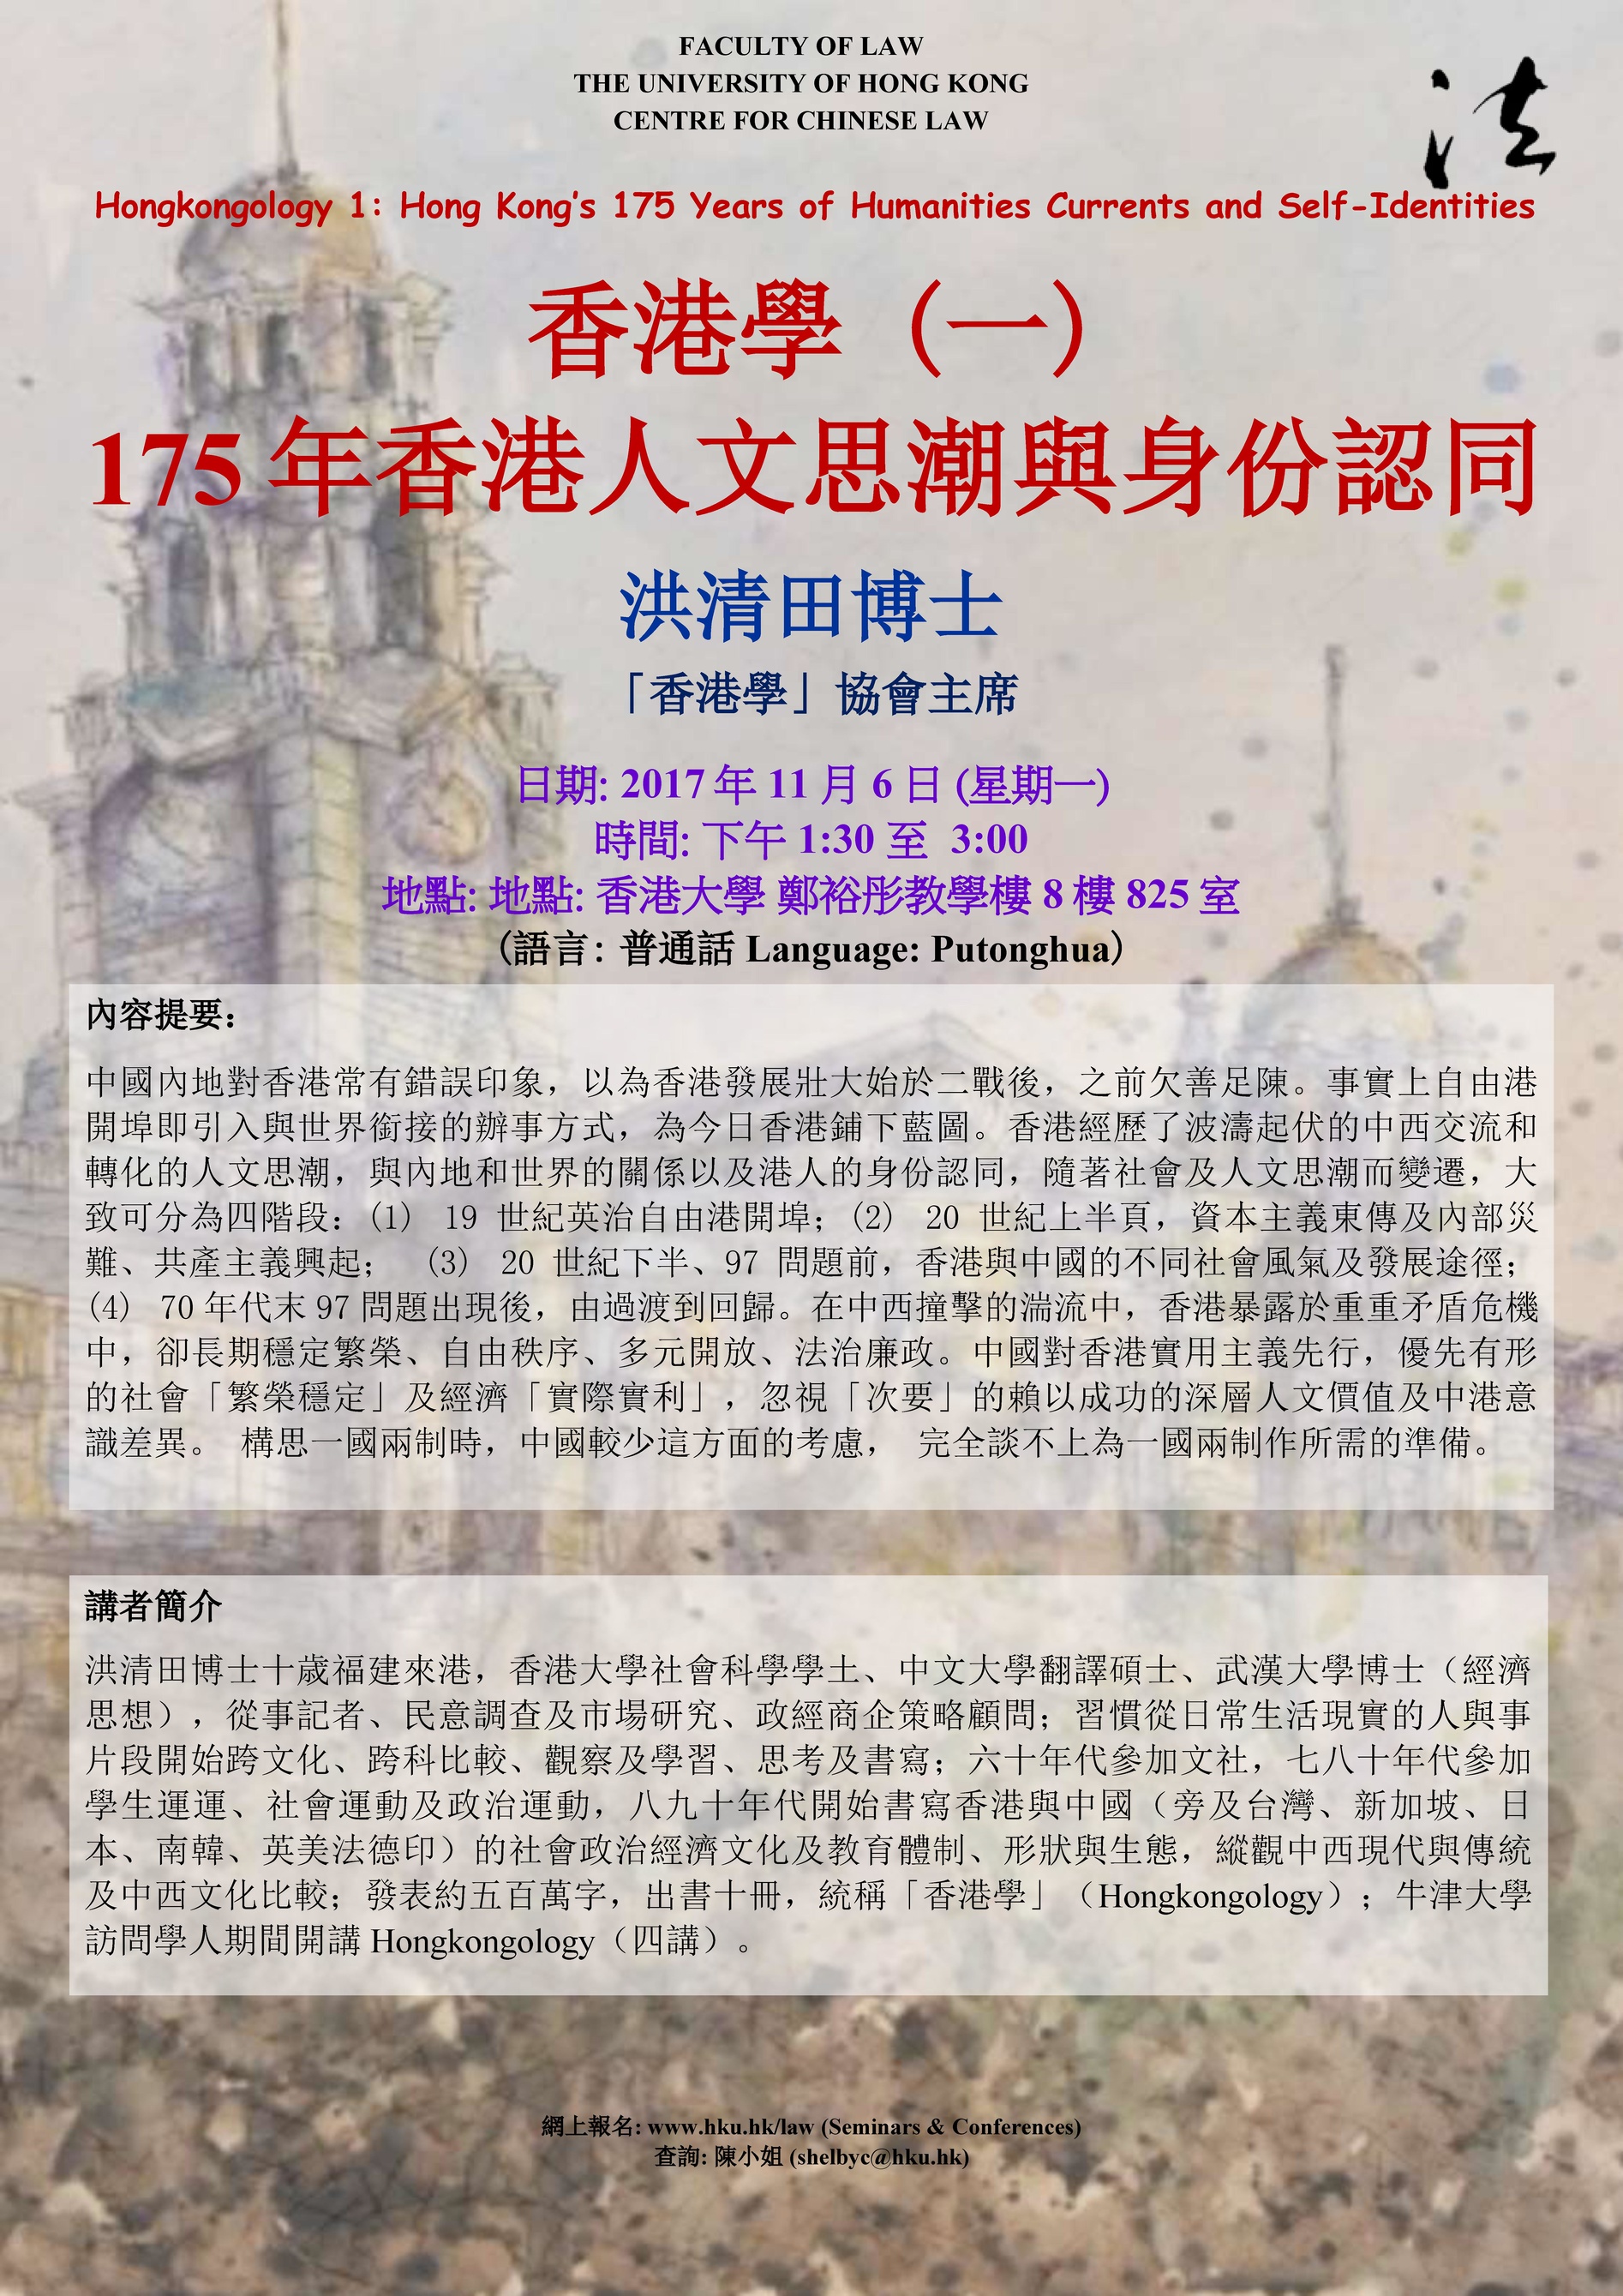 Hongkongology (1): Hong Kong's 175 Years of Humanities Currents and Self-Identities